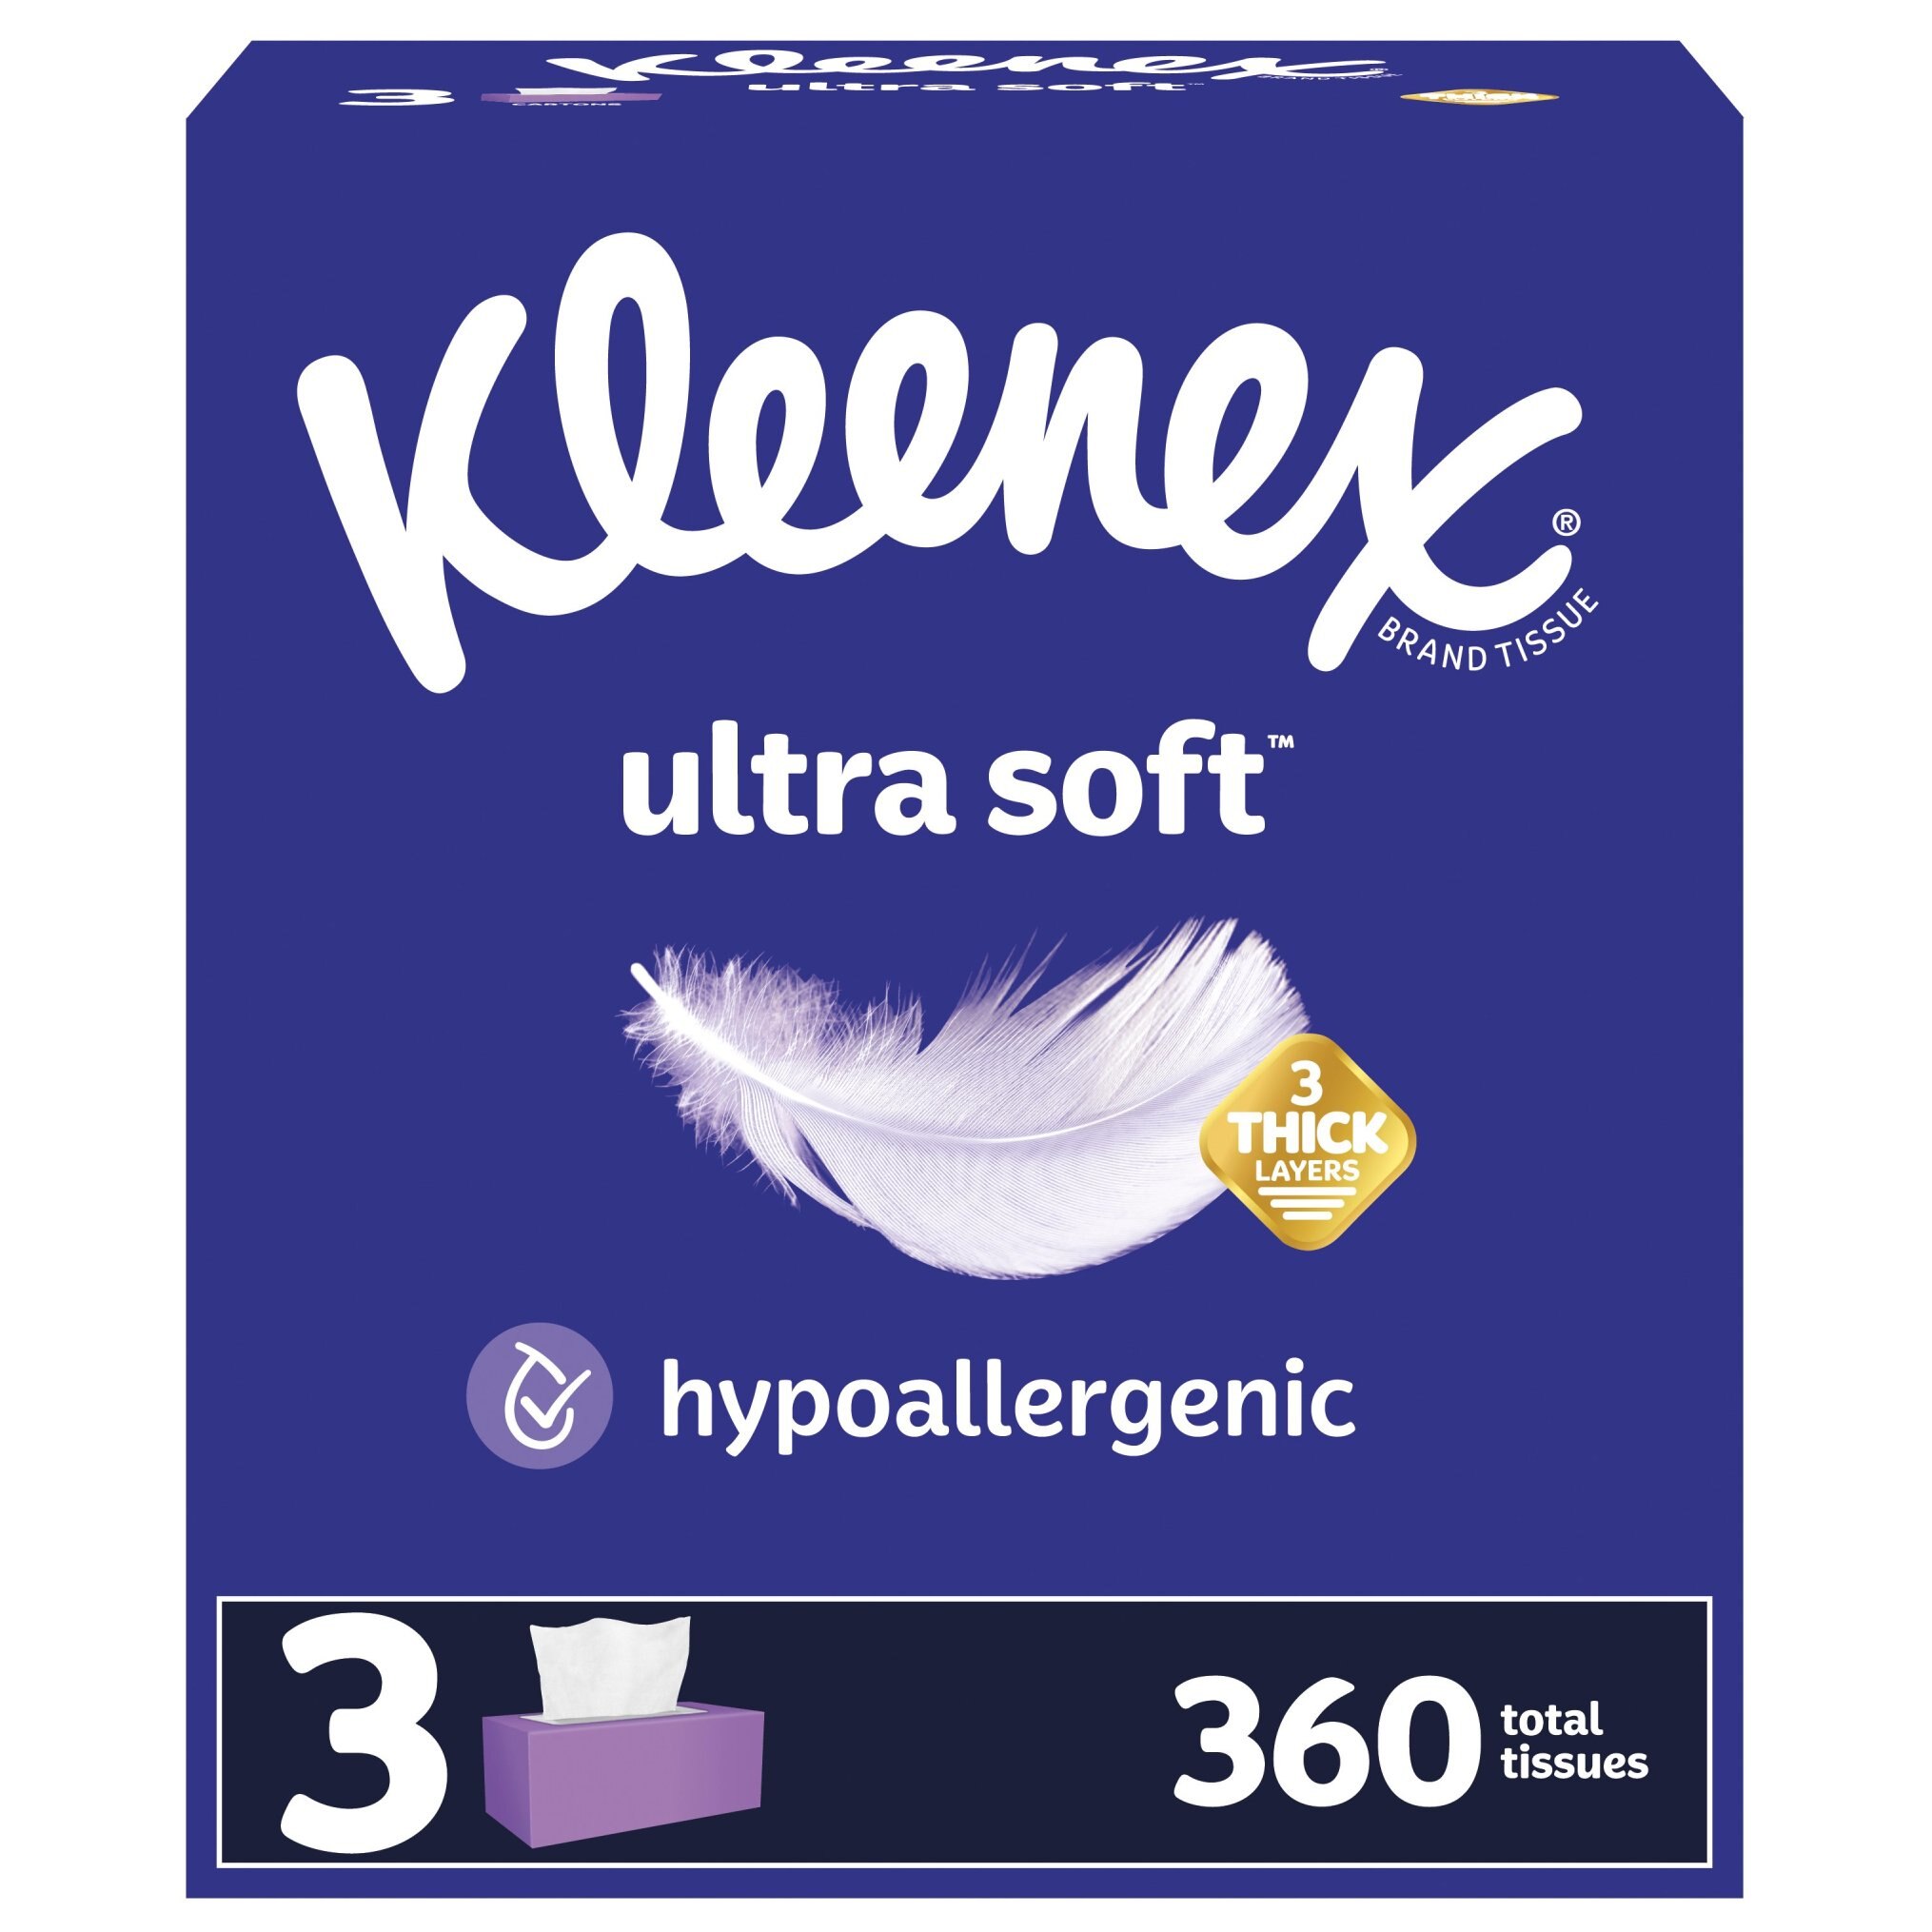 Kleenex Ultra Soft Facial Tissues, 3 Flat Boxes, 120 Tissues per Box, 3-Ply (360 Total Tissues)